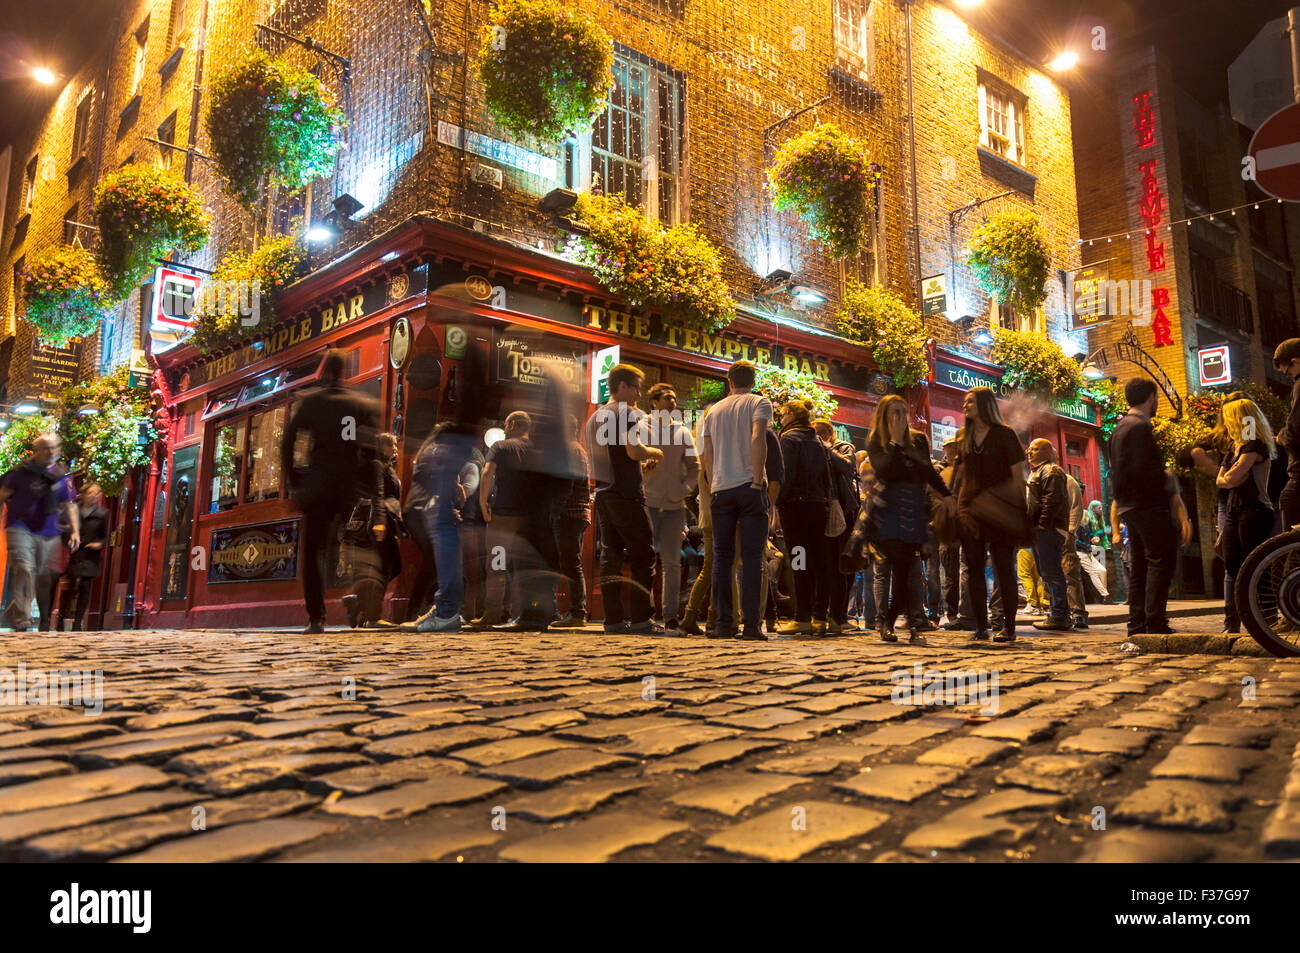 Temple Bar pub at night, Dublin, Ireland Stock Photo